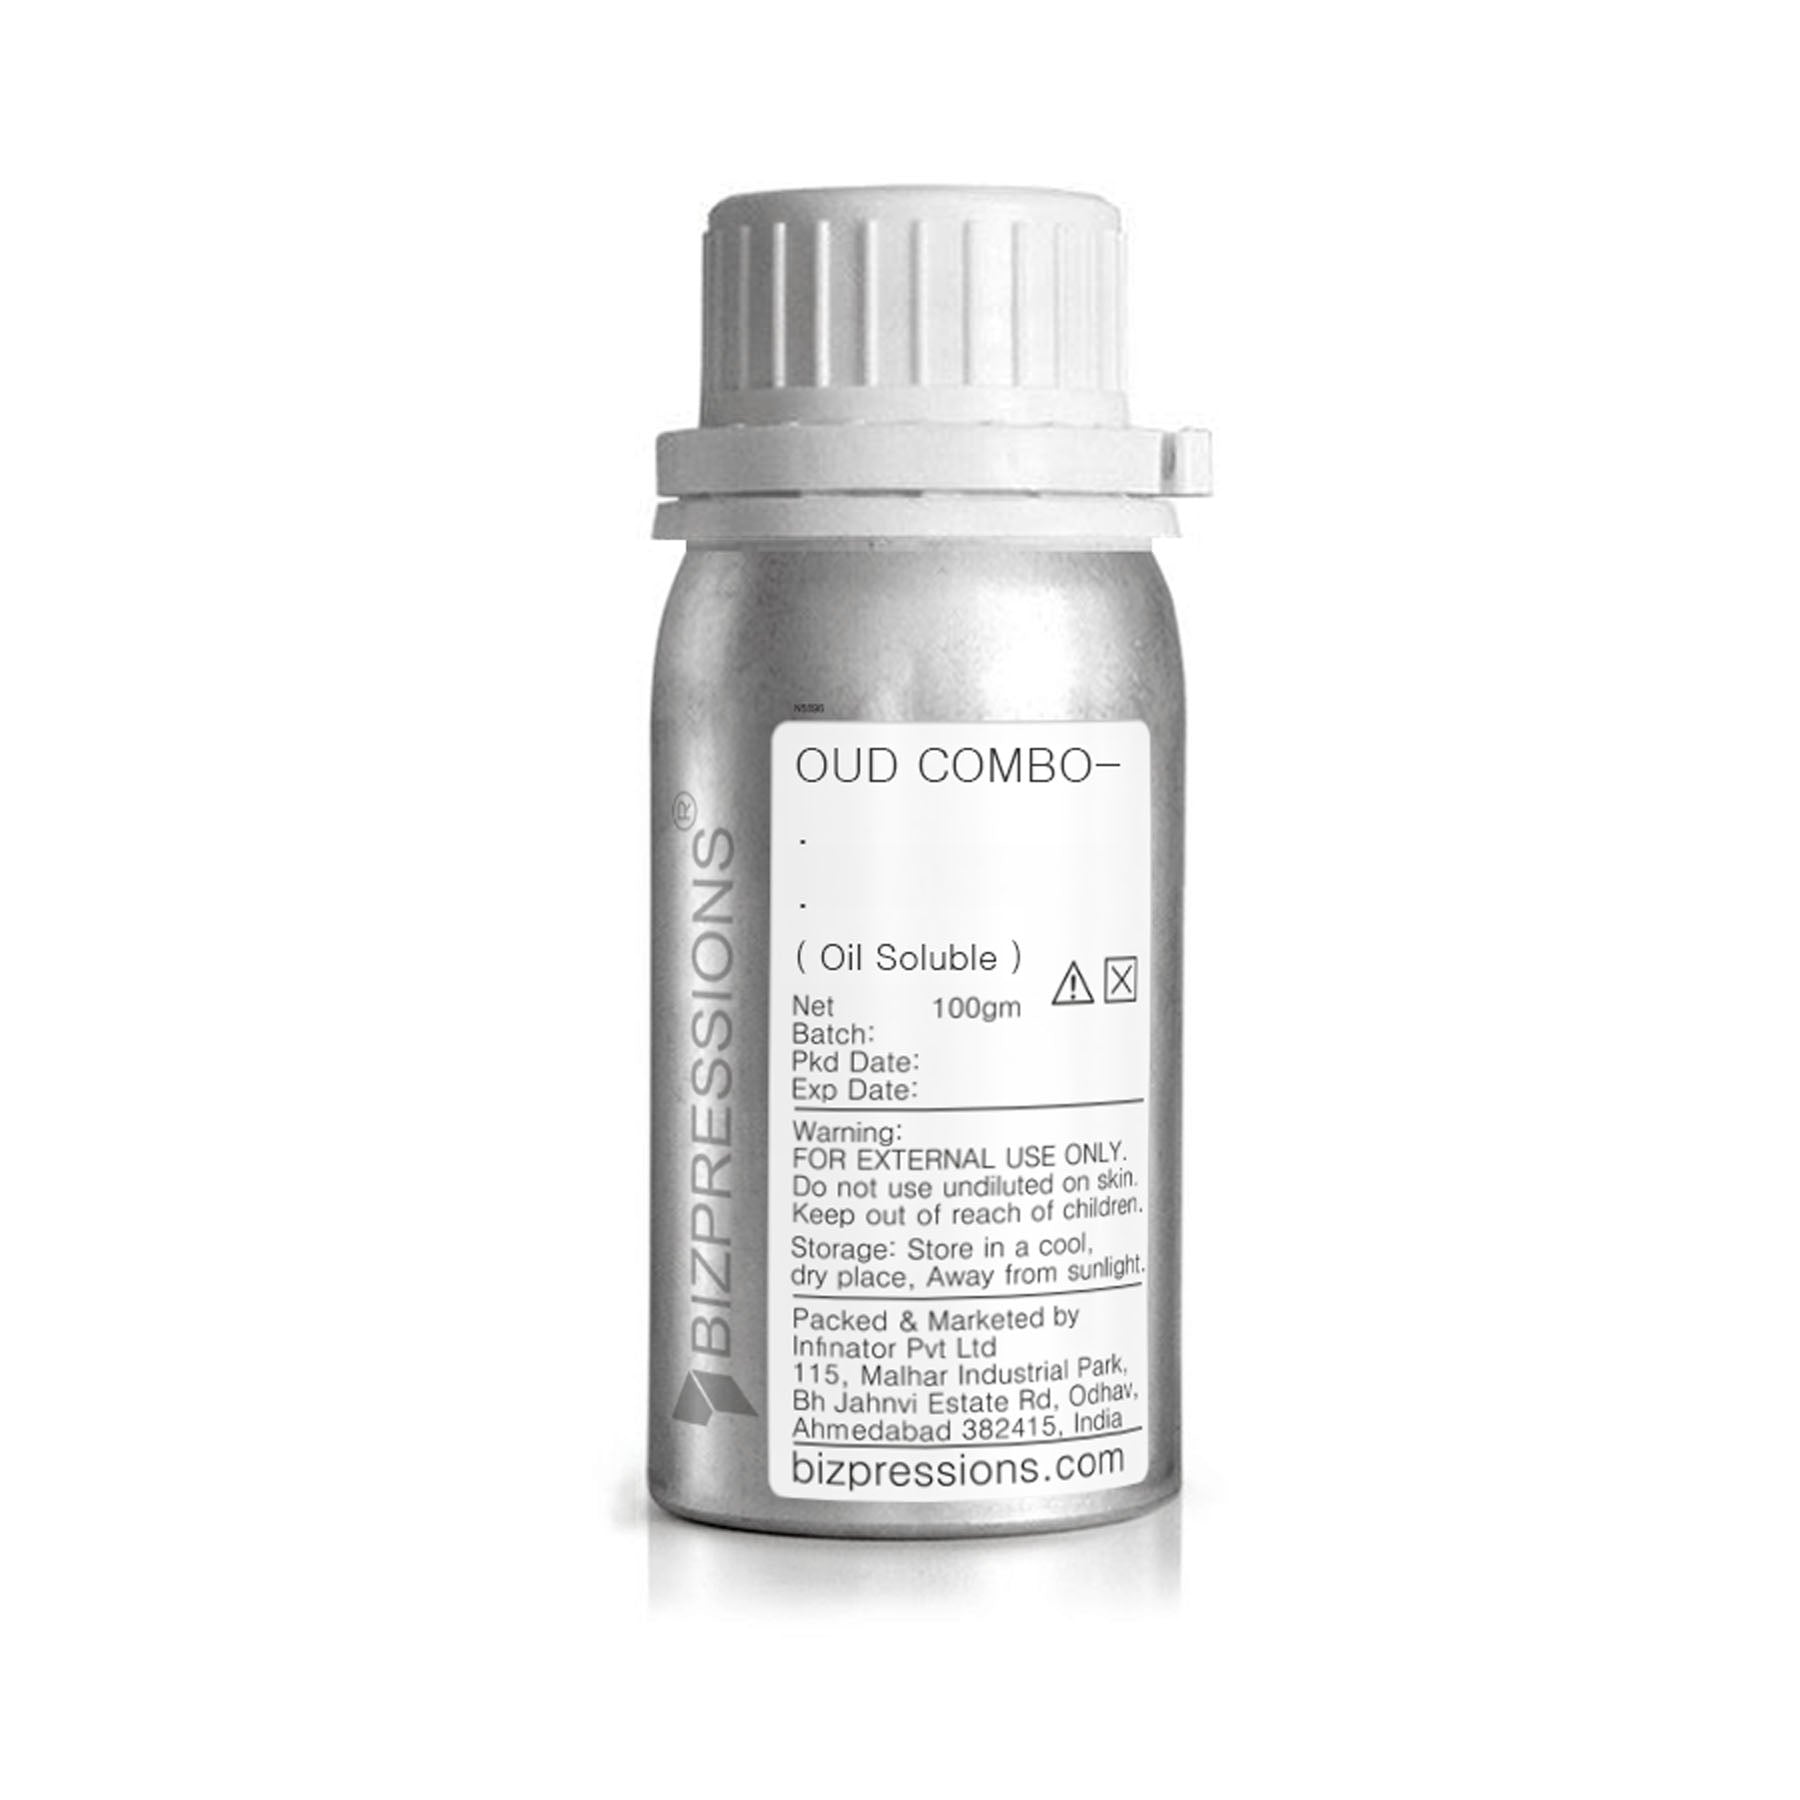 OUD COMBODI - Fragrance ( Oil Soluble ) - 100 gm